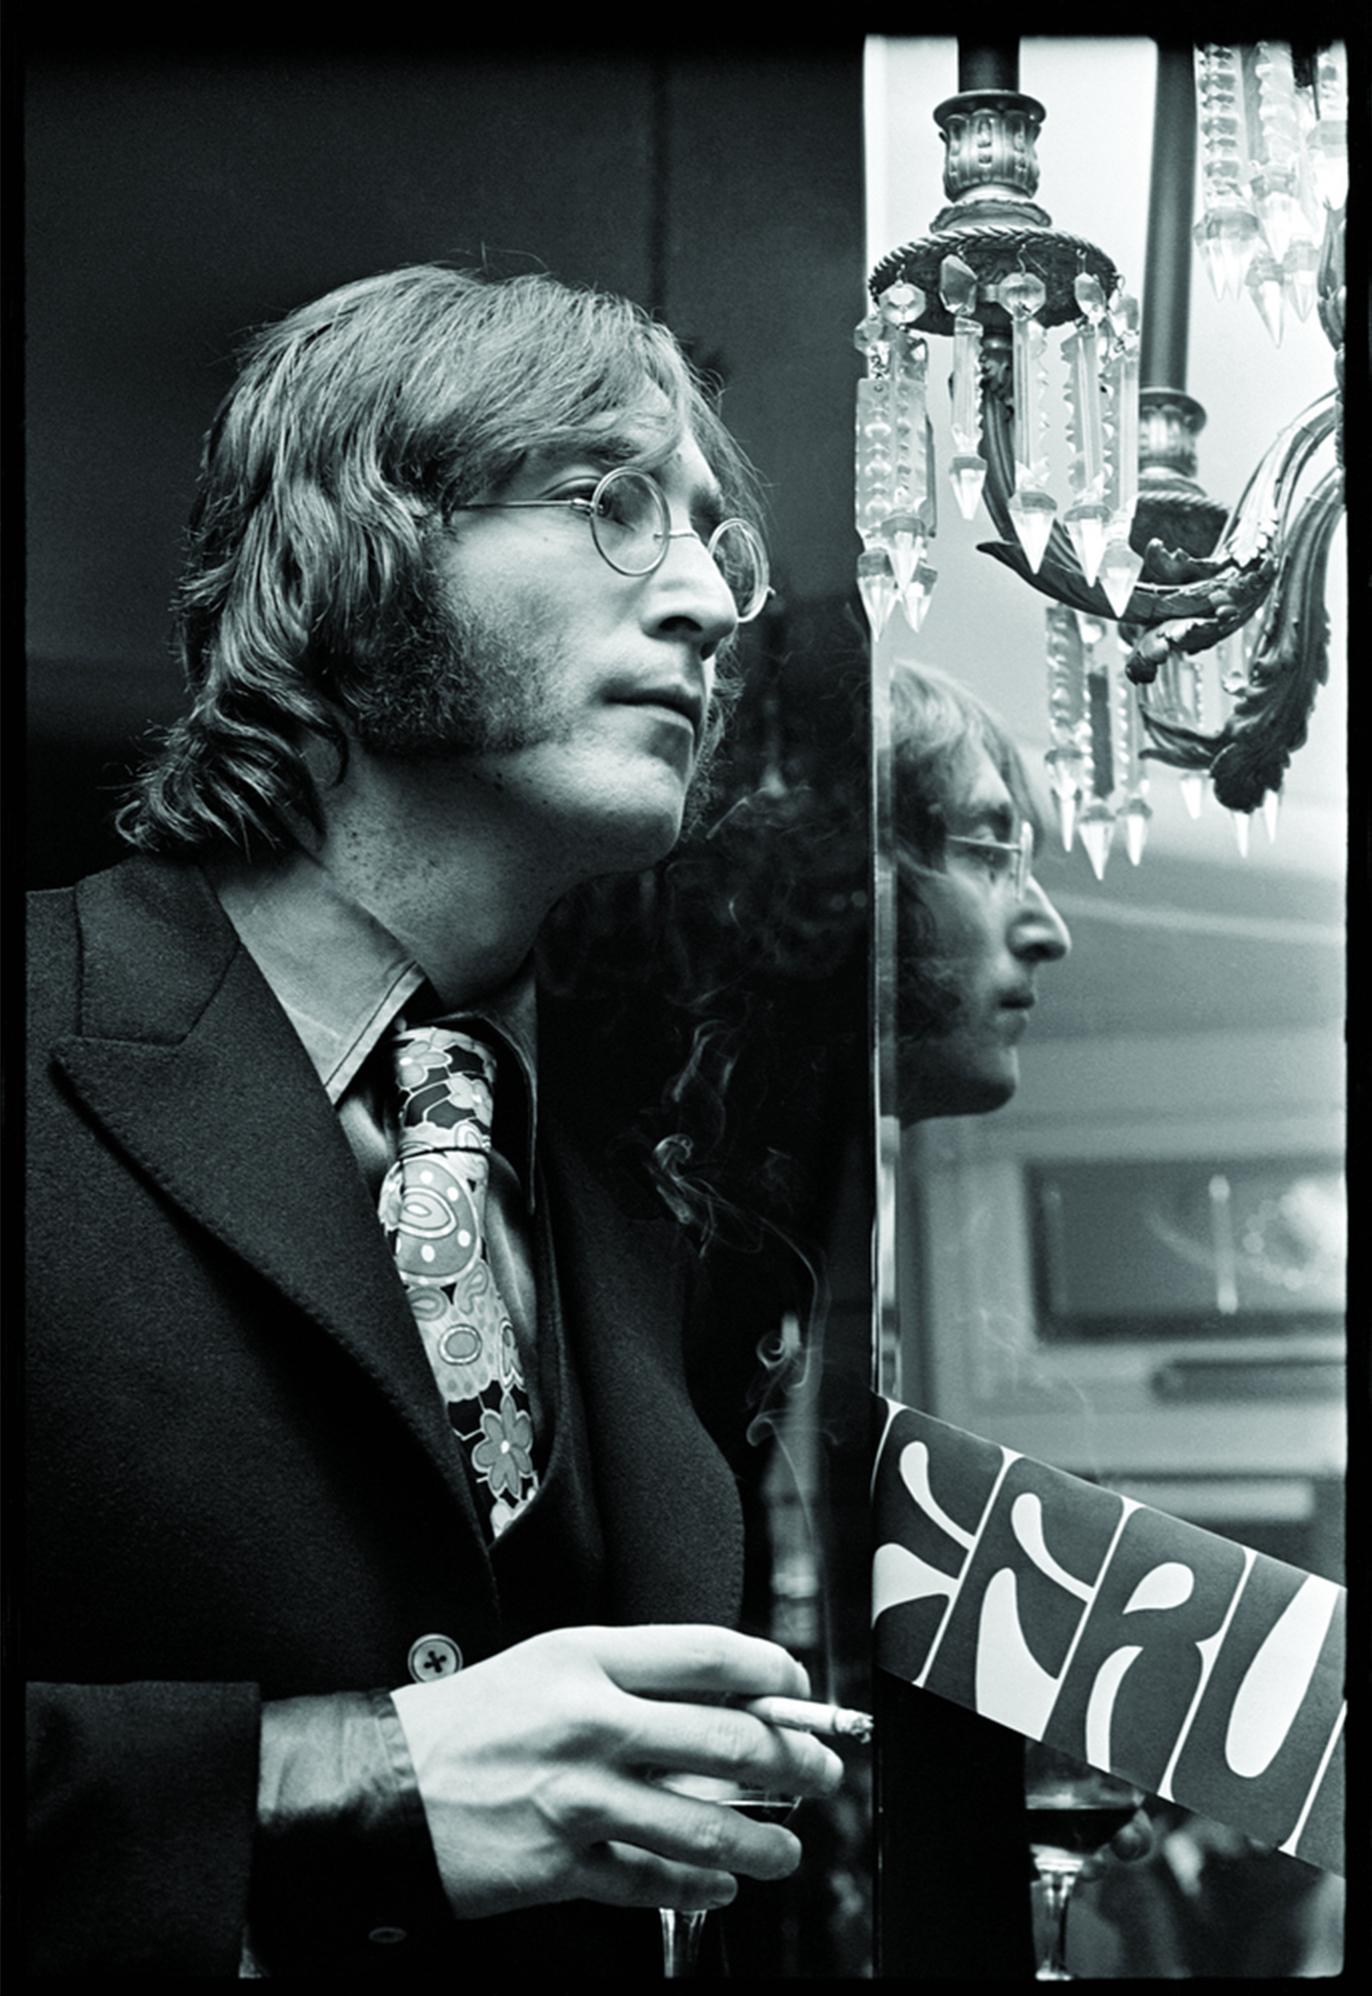 Alec Byrne Black and White Photograph - John Lennon 1968 portrait